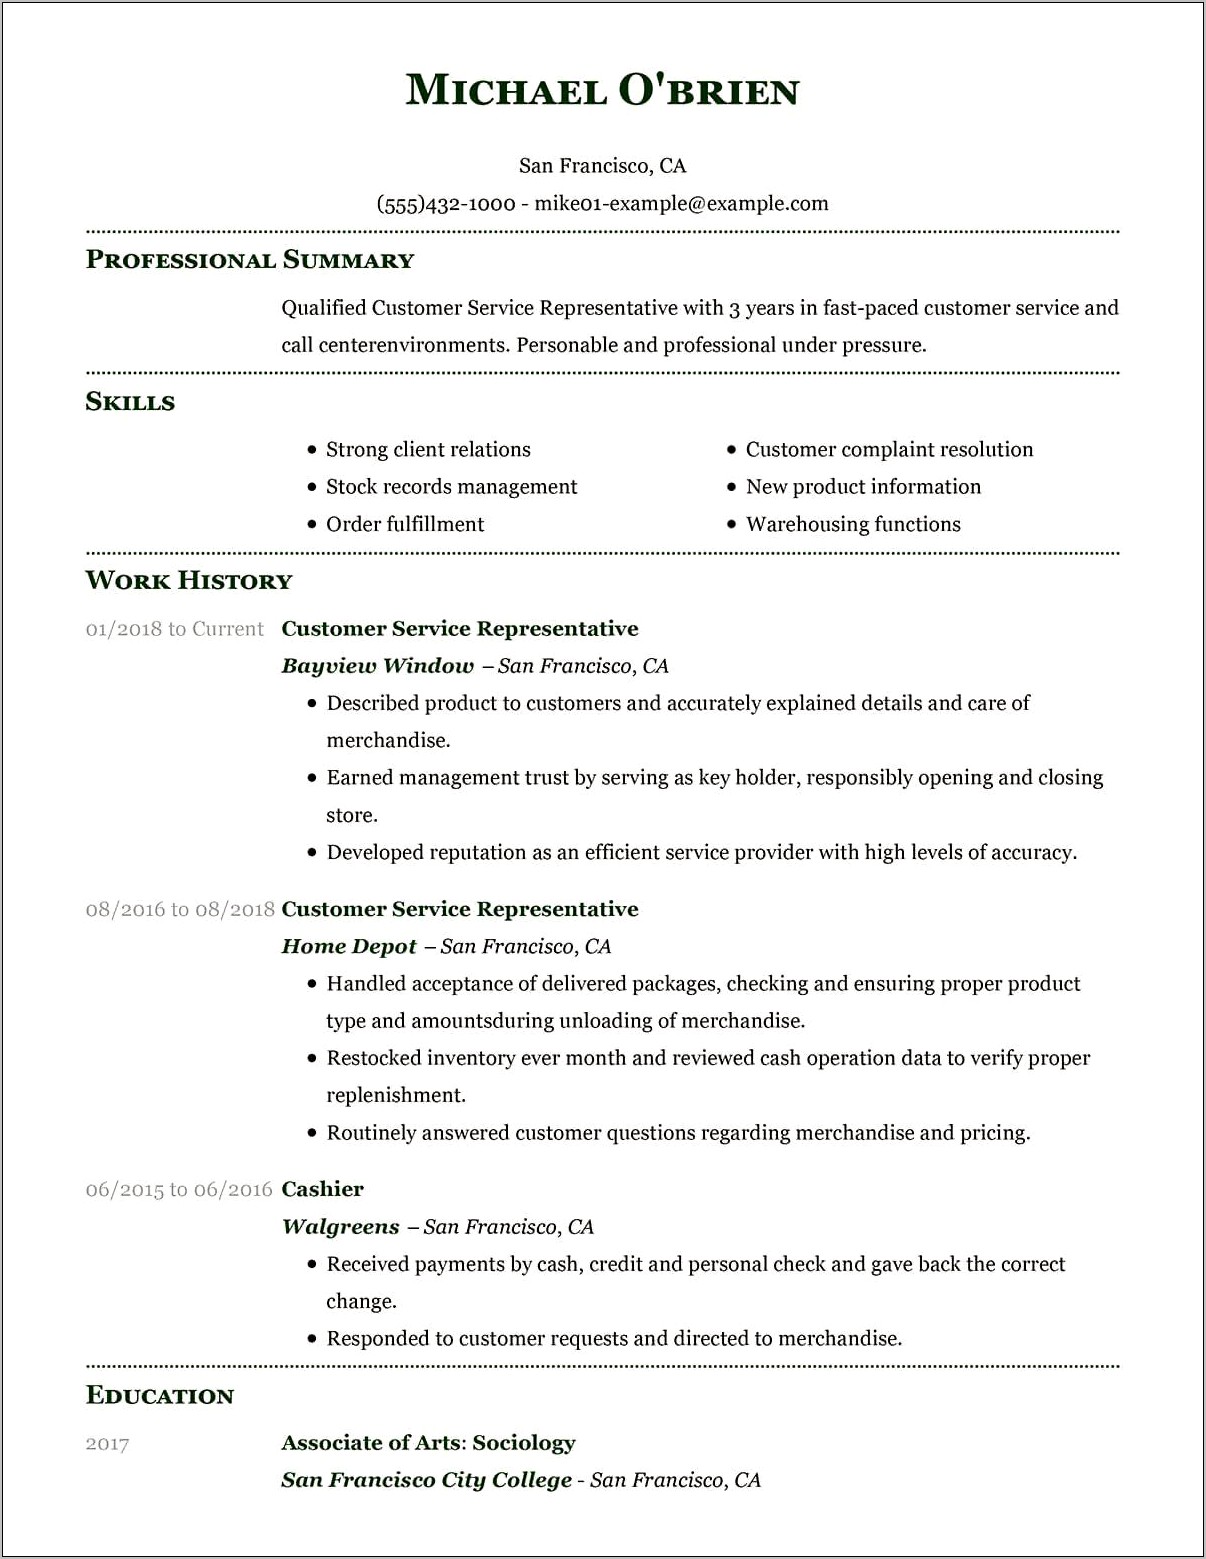 Resume Description For Customer Service Rep